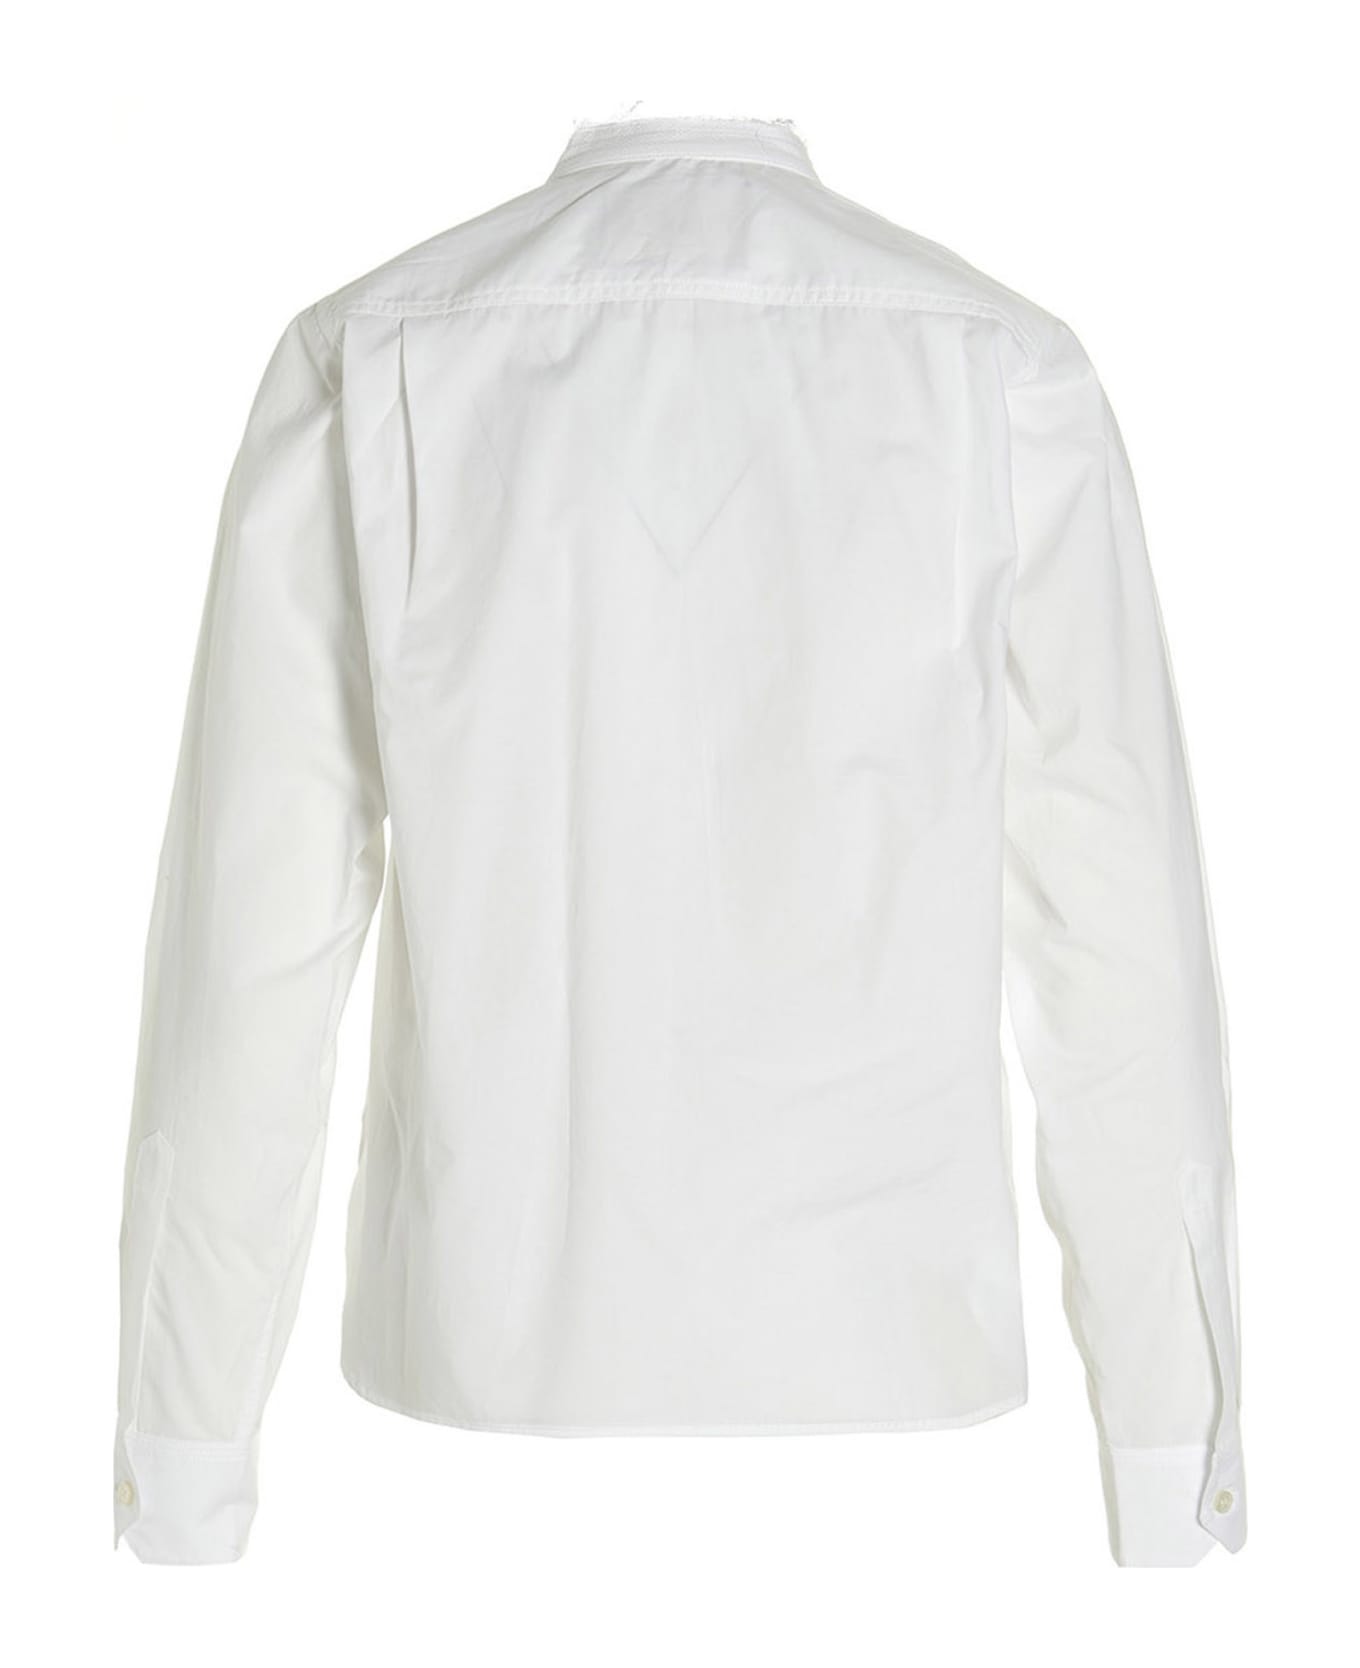 Plan C 'plastron Piqué Shirt - White